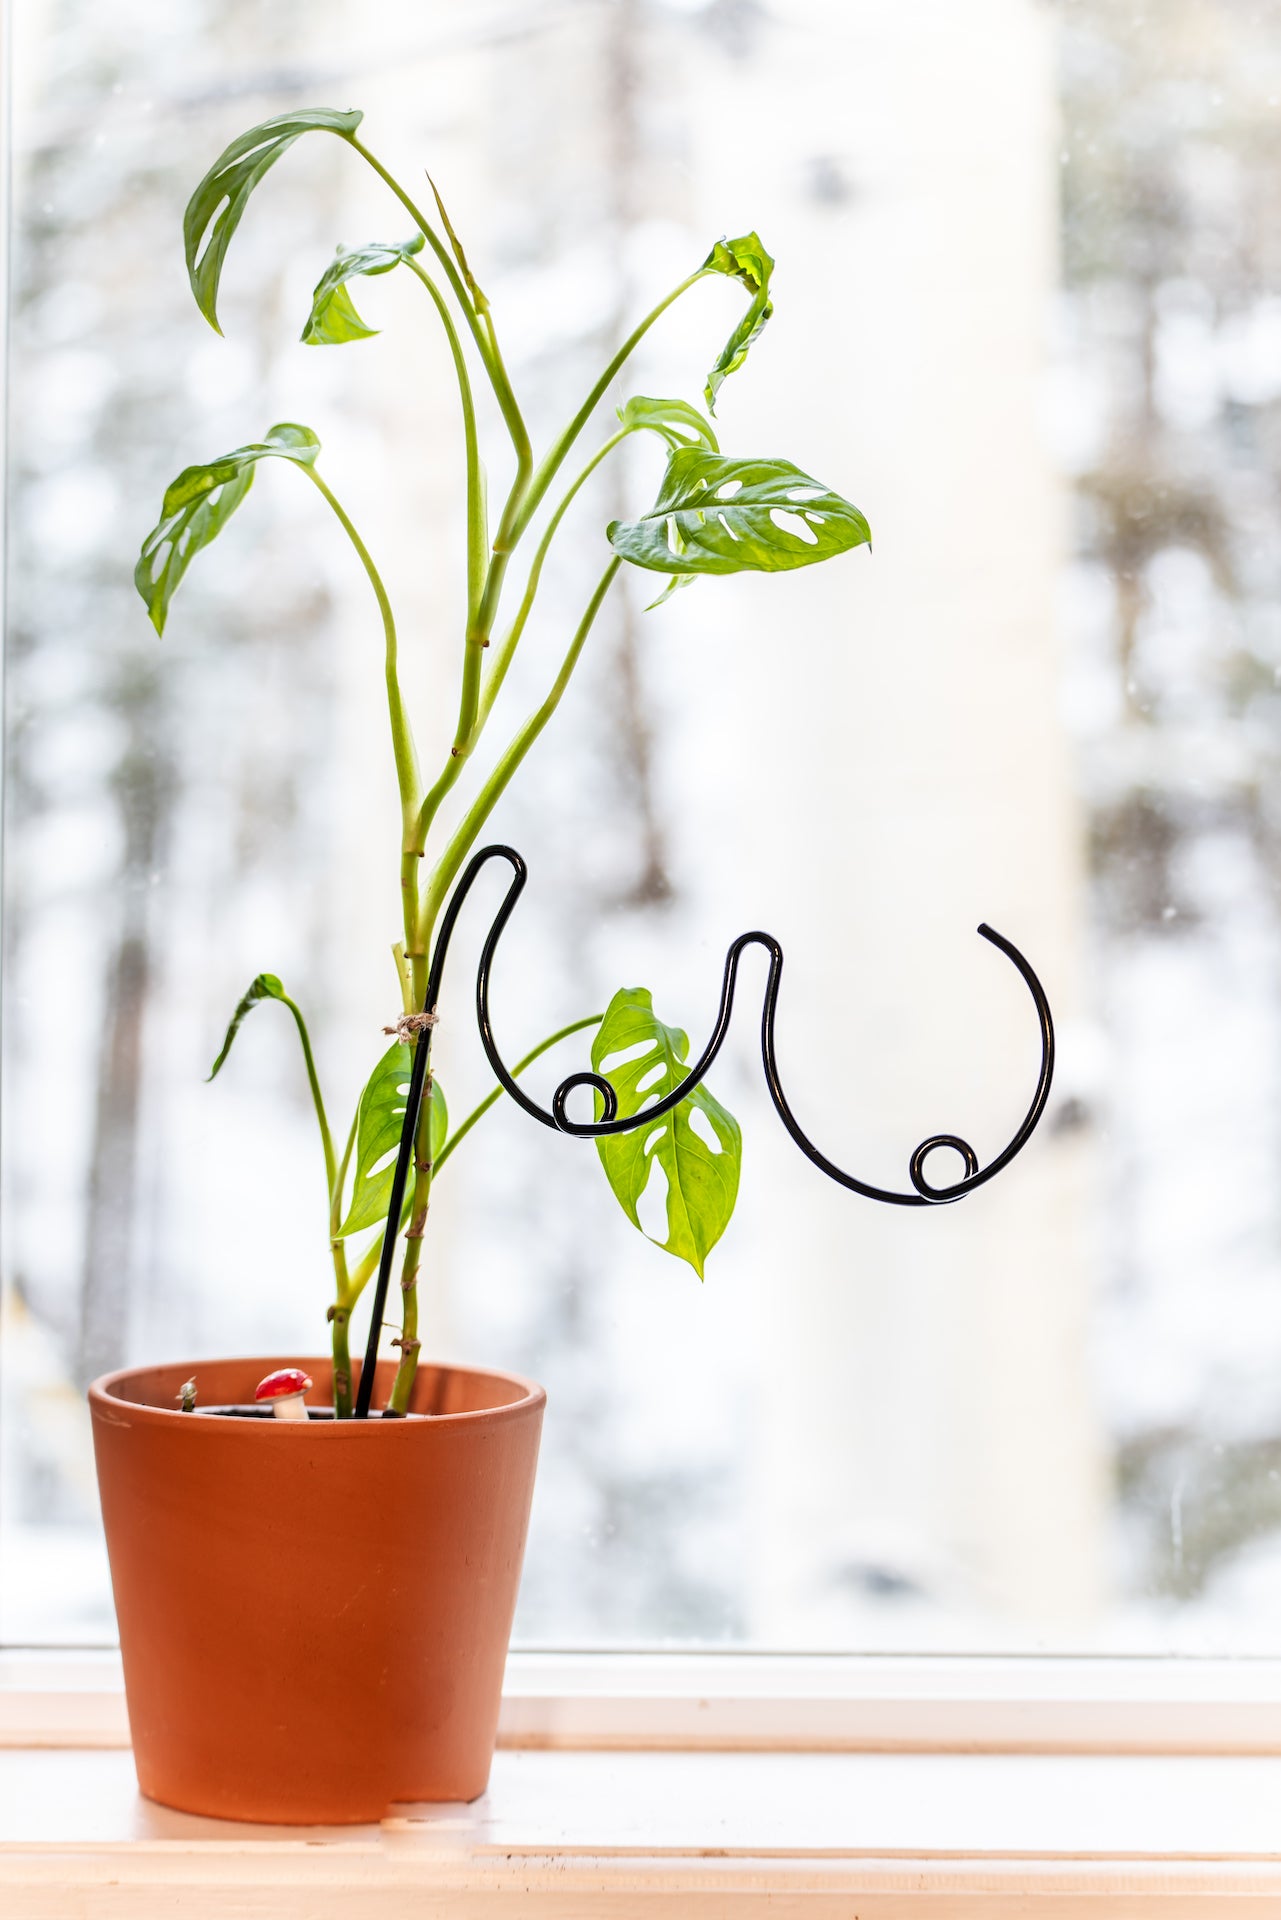 Trellis for Houseplants, Boobies Design, Funny Plant Person Gift